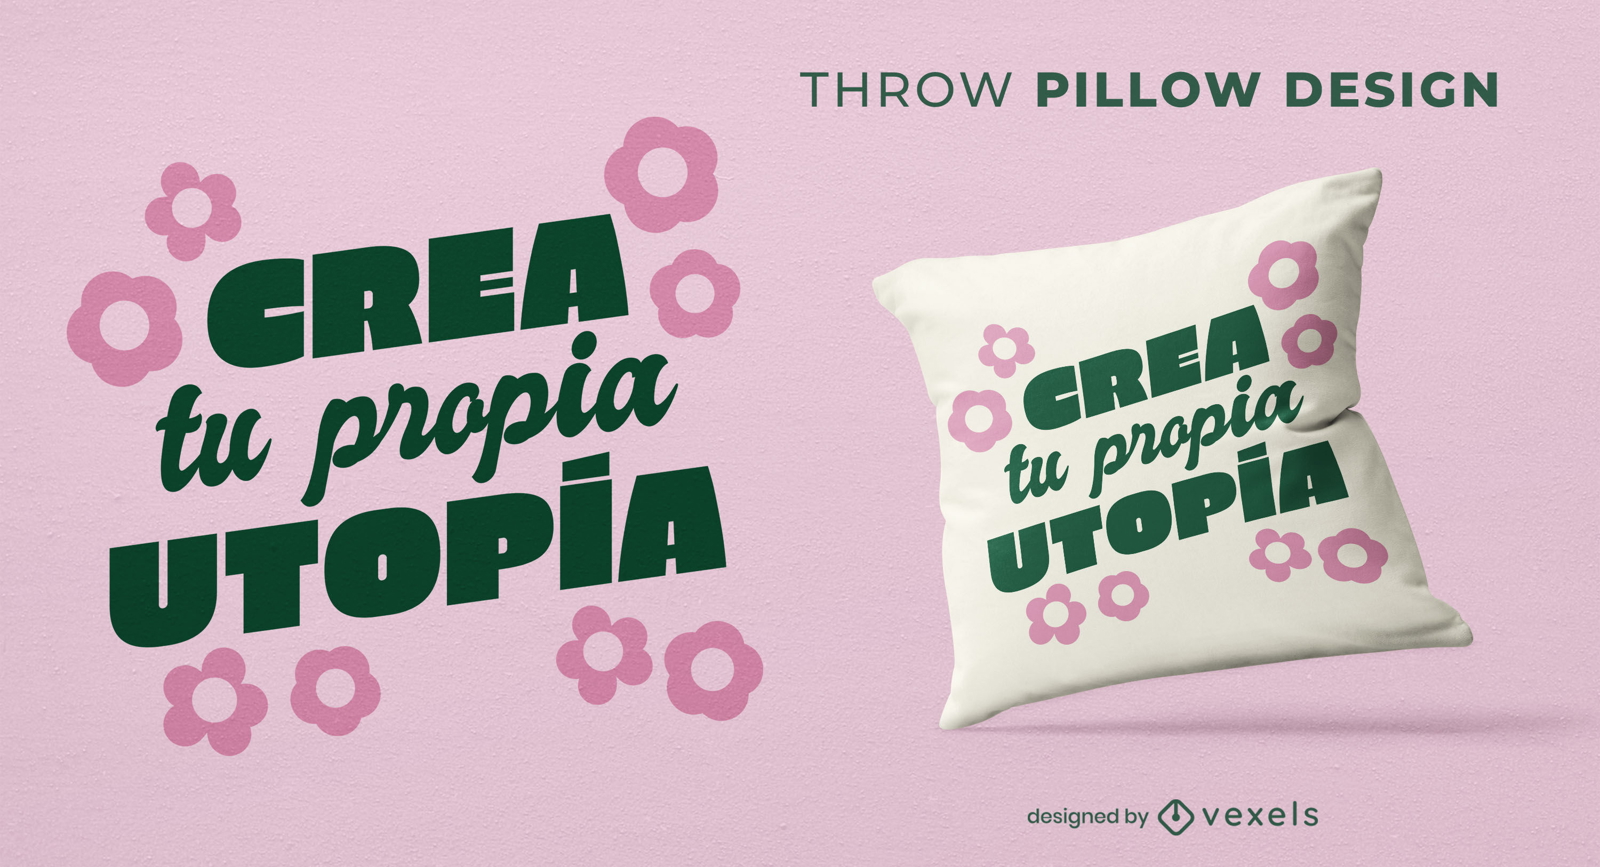 Utopia Spanish quote throw pillow design